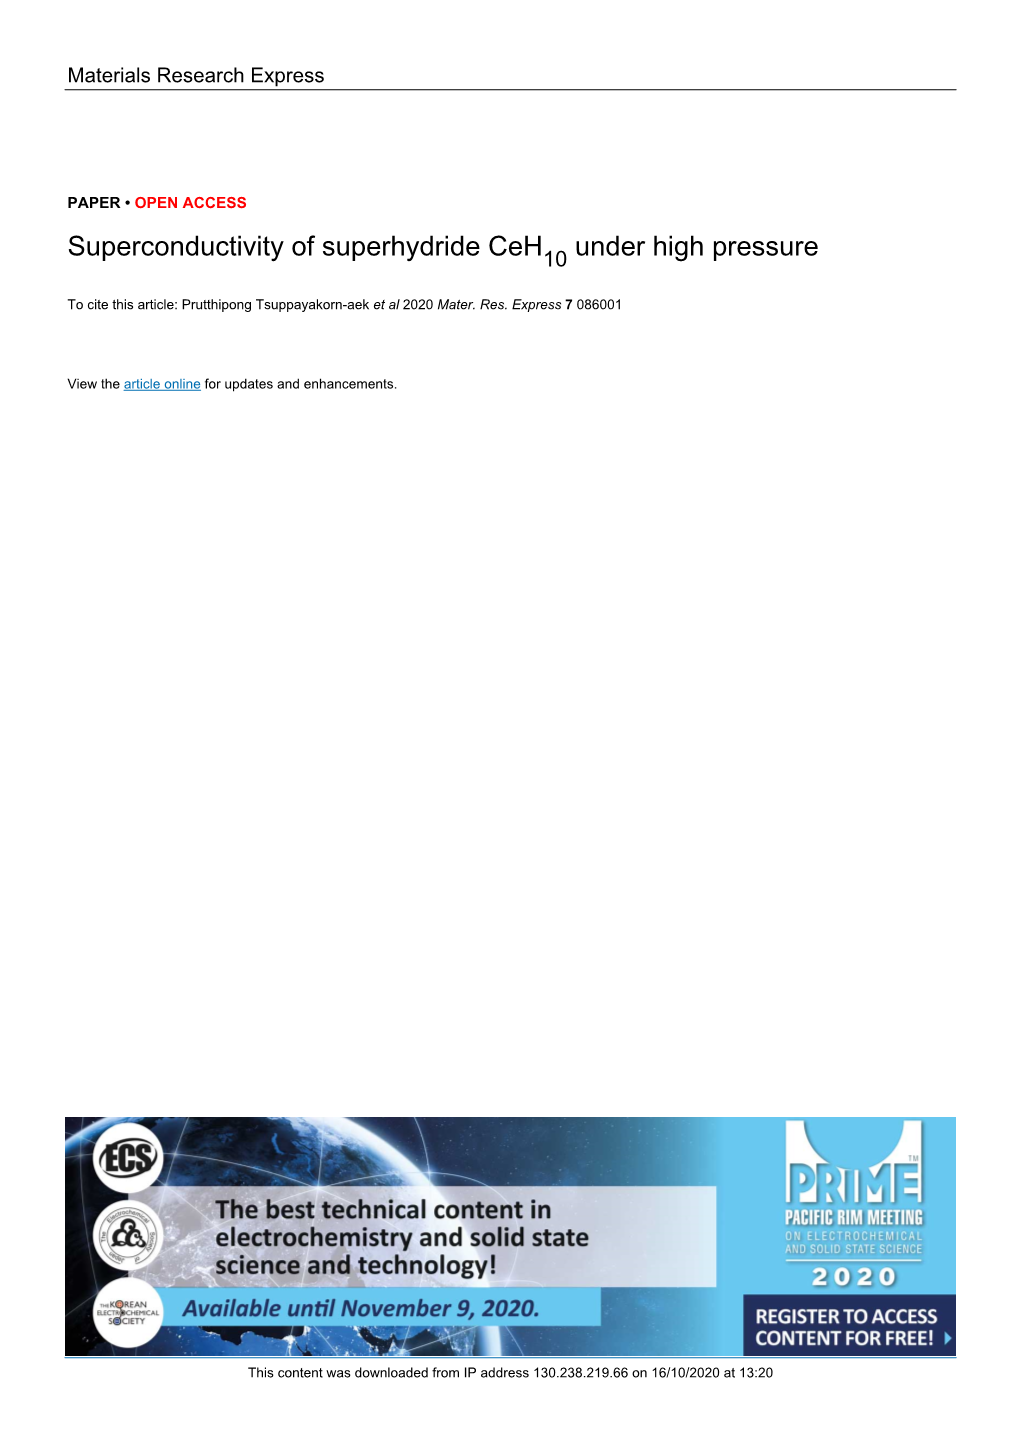 Superconductivity of Superhydride Ceh10 Under High Pressure